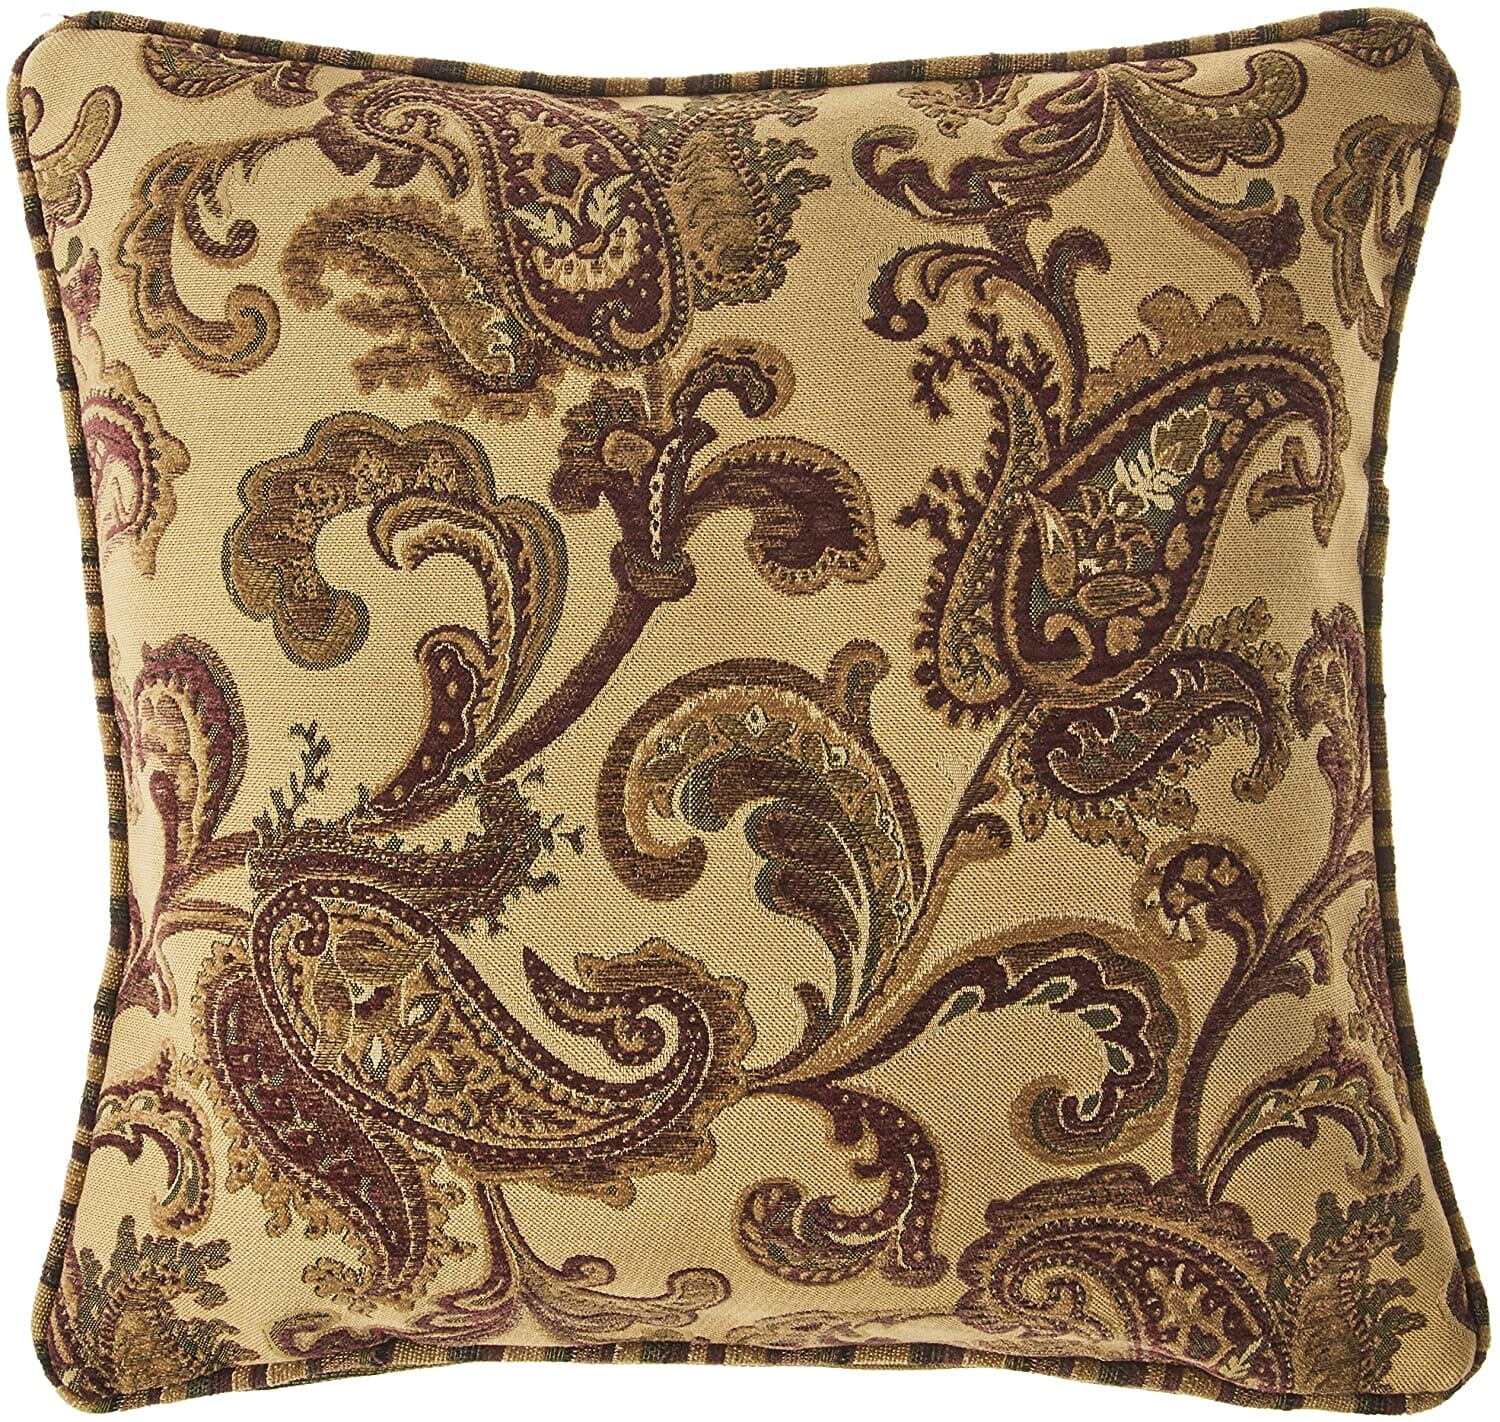 Tache Chenille Elegant Paisley Striped Brown Burgundy Exotic Blooms Comforter Set With Zipper Cover (BM14224) - Tache Home Fashion